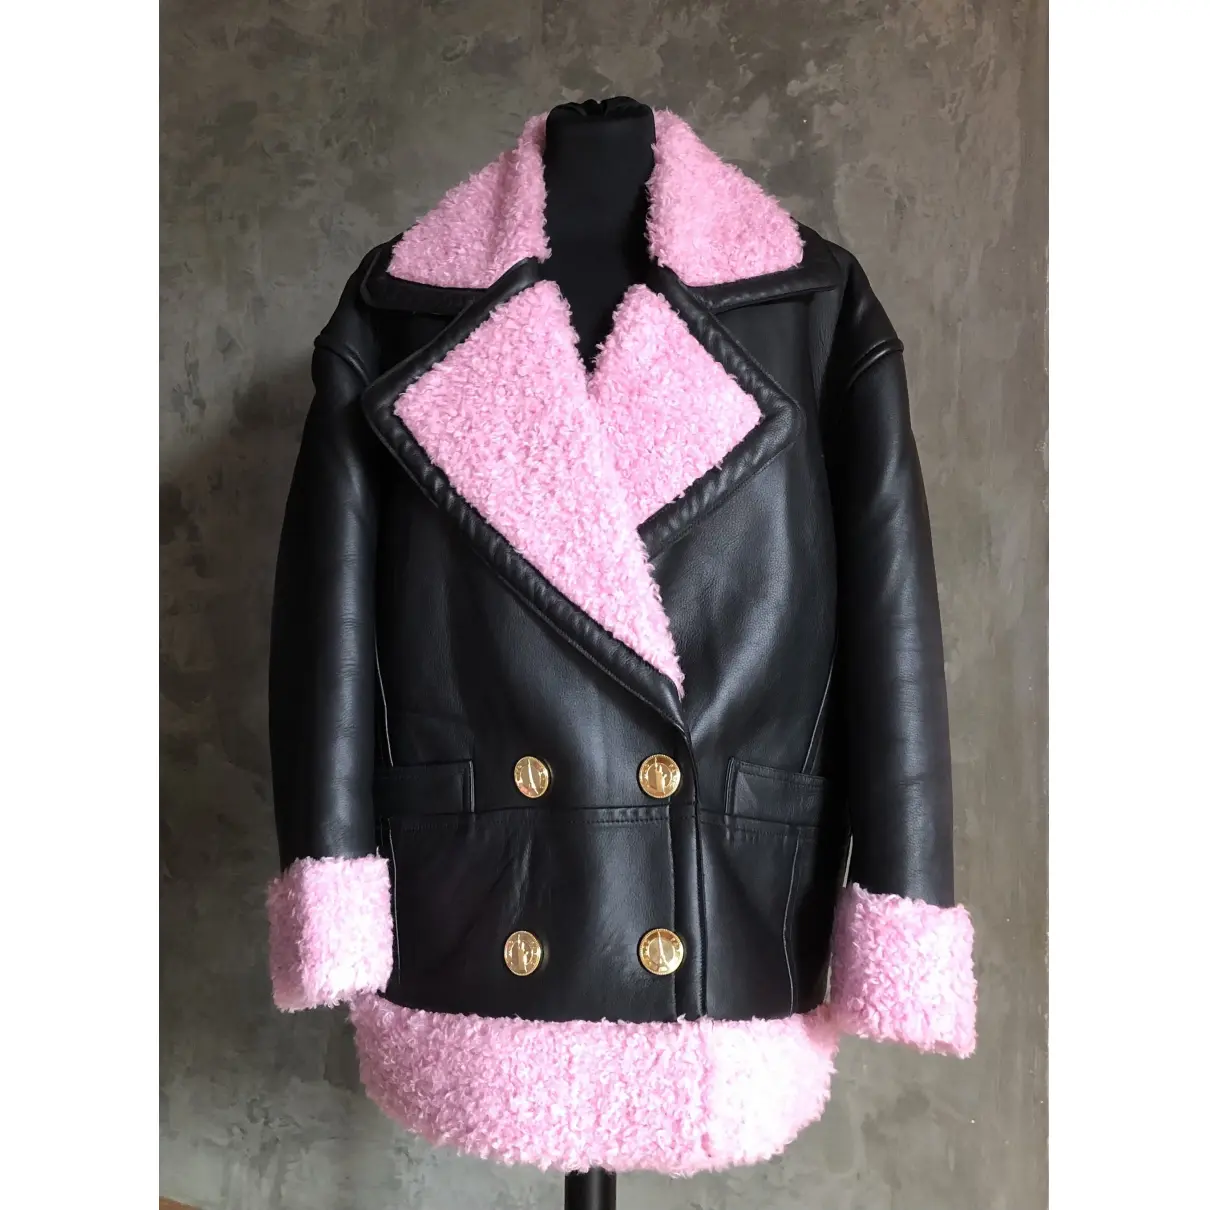 Buy Kenzo x H&M Leather coat online